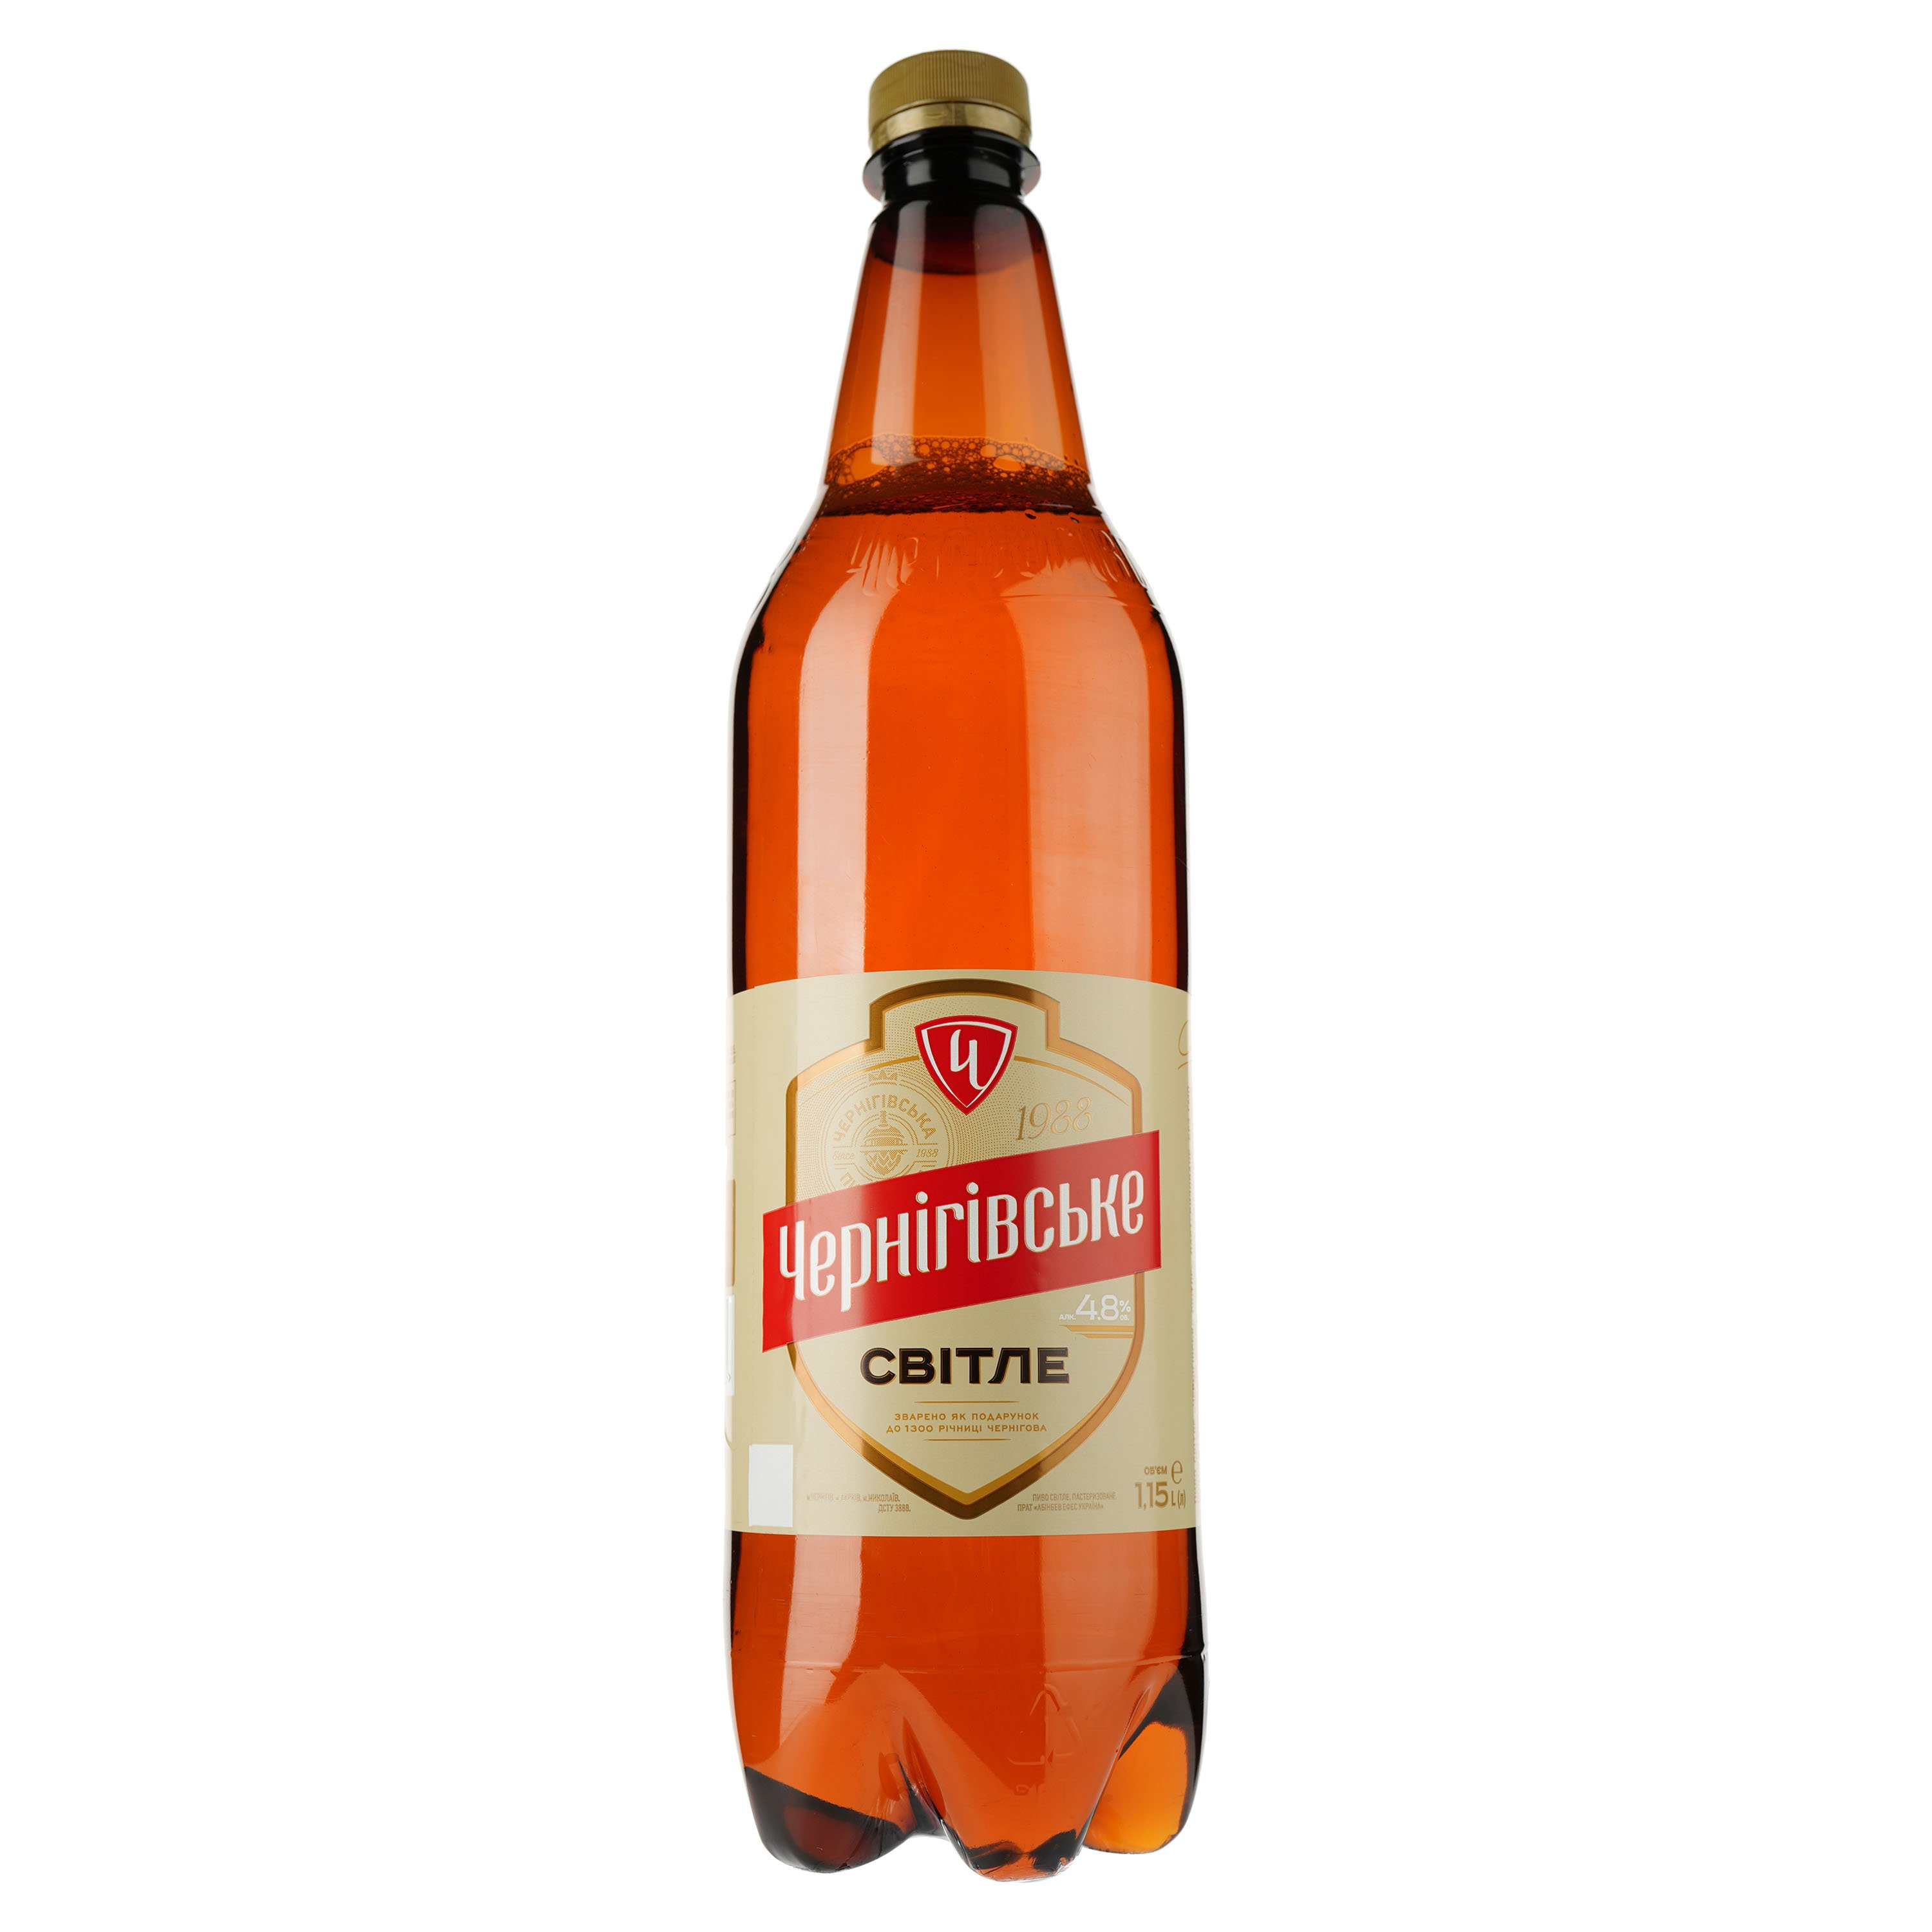 Пиво Чернігівське, светлое, 4,5%, 1,15 л (744380) - фото 1